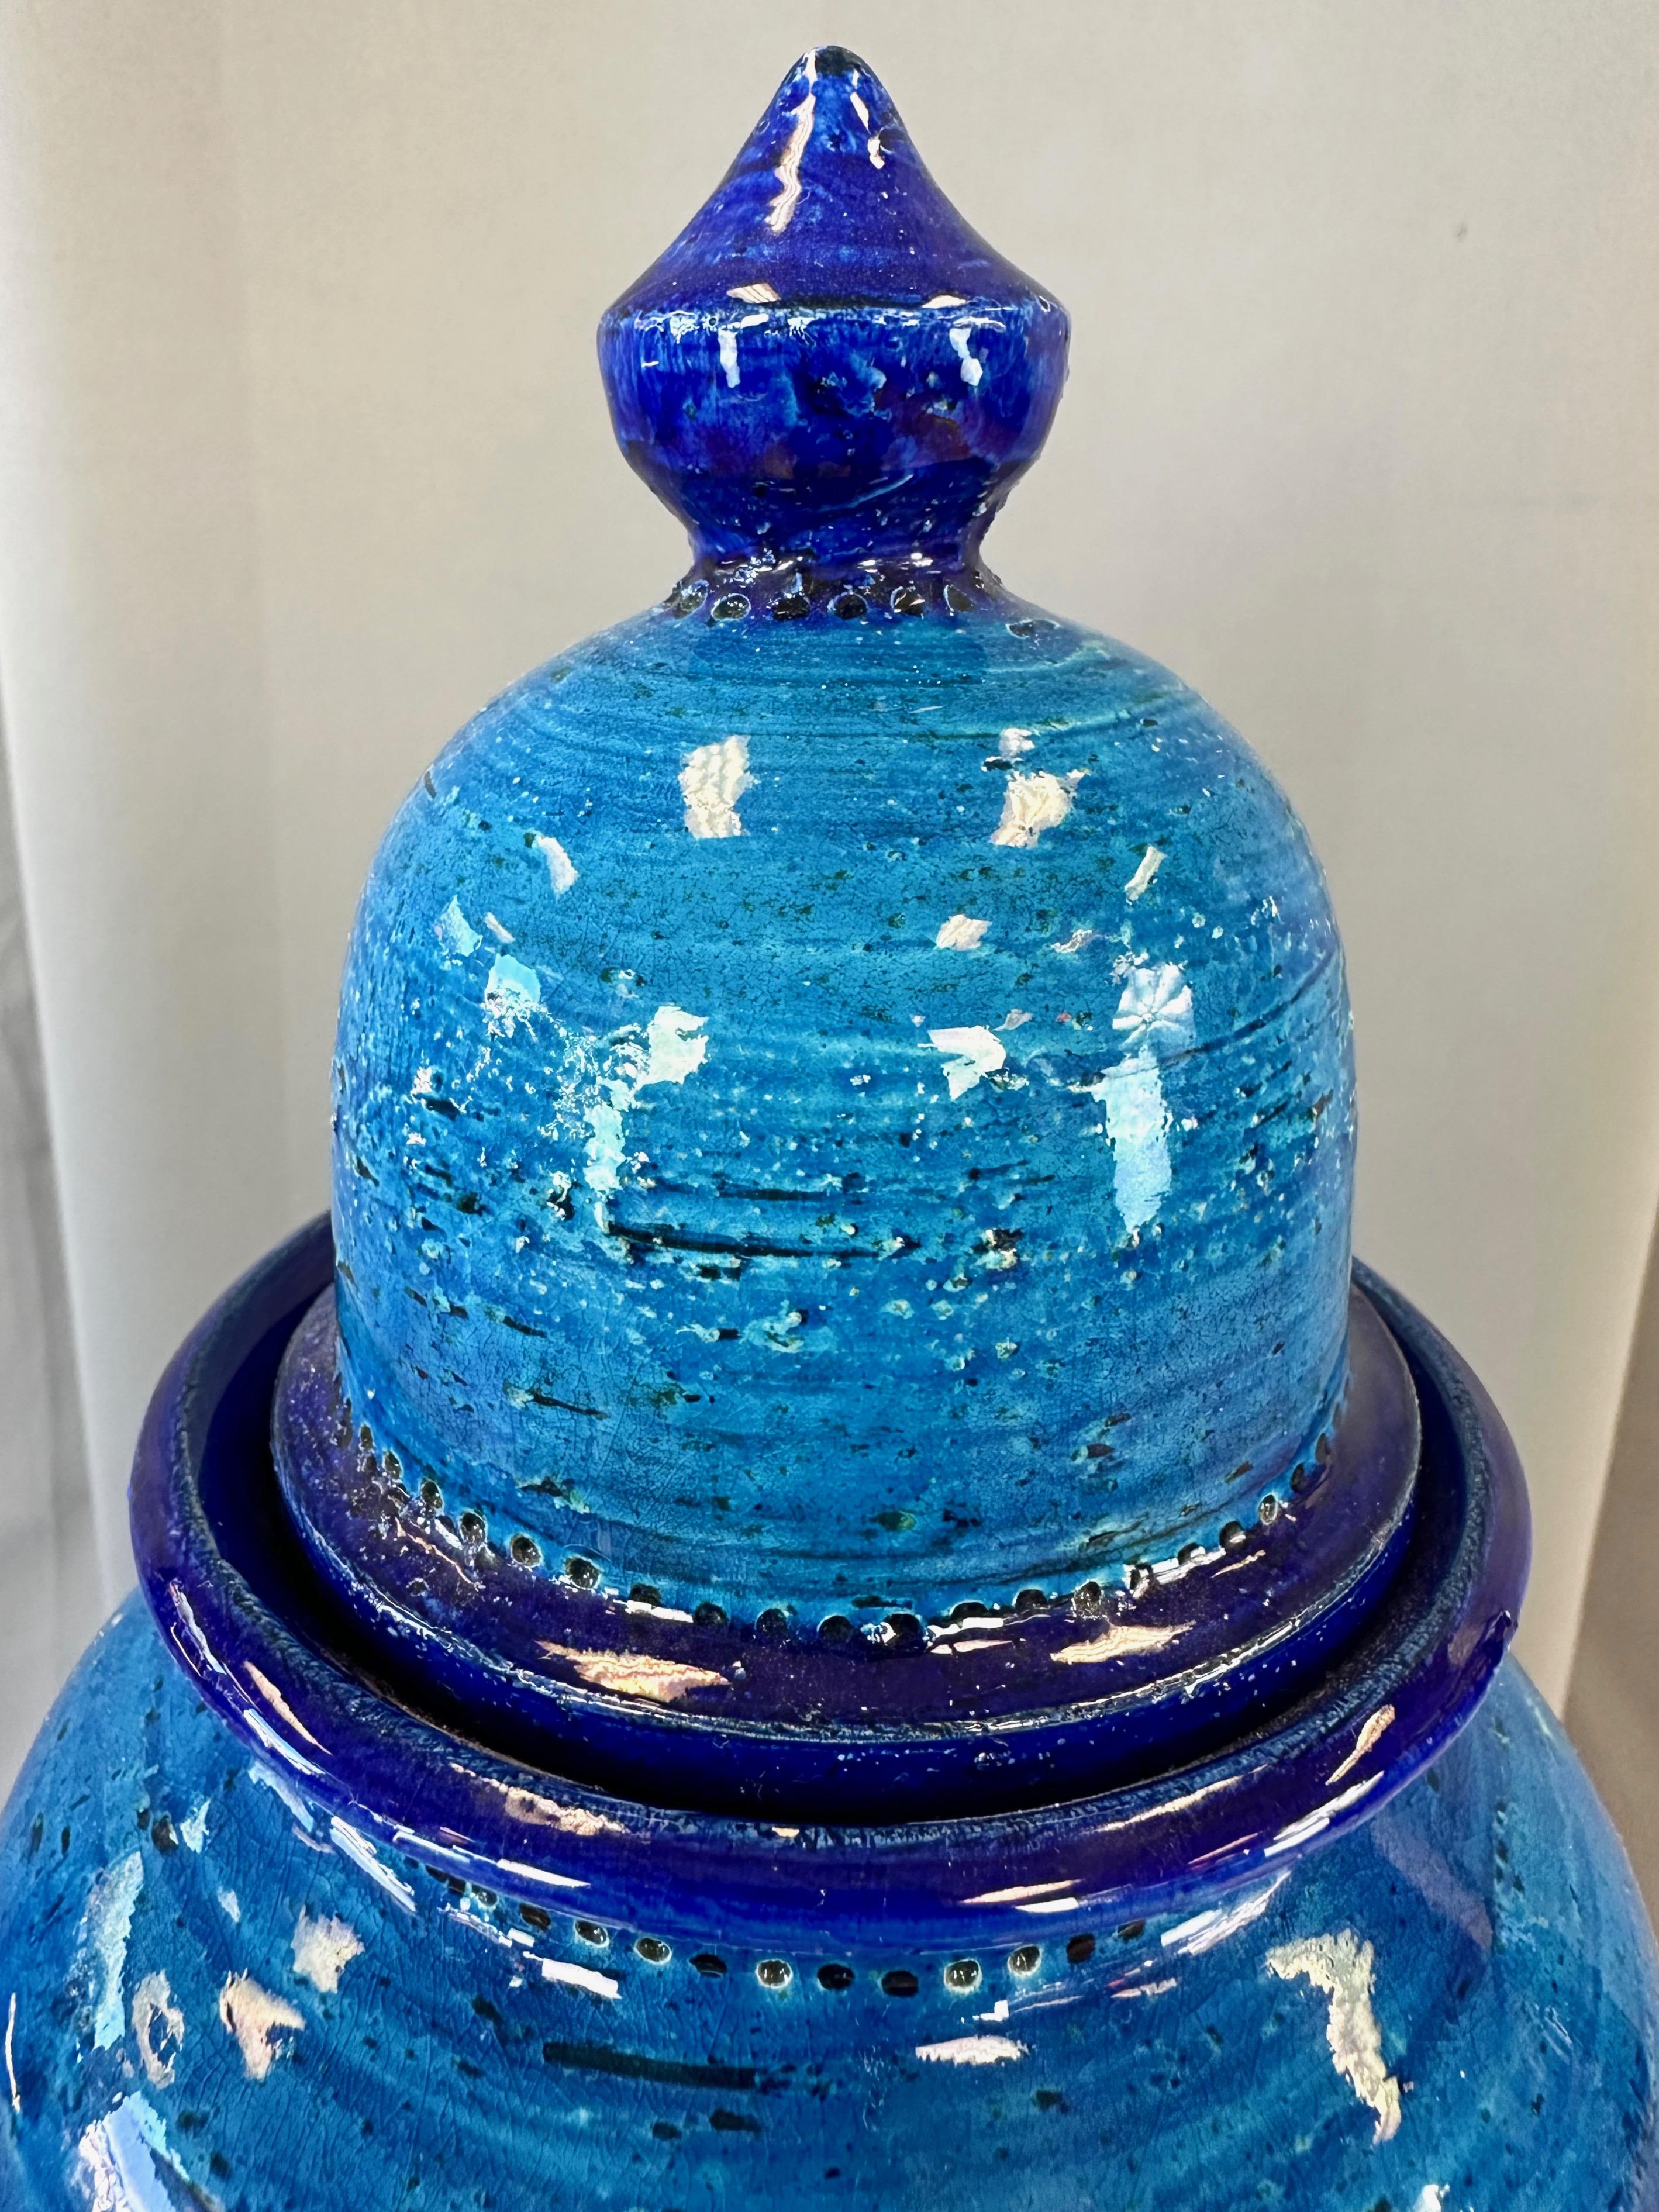 Aldo Londi for Bitossi Rimini Blue Tall Lidded Jar, 1960s For Sale 2